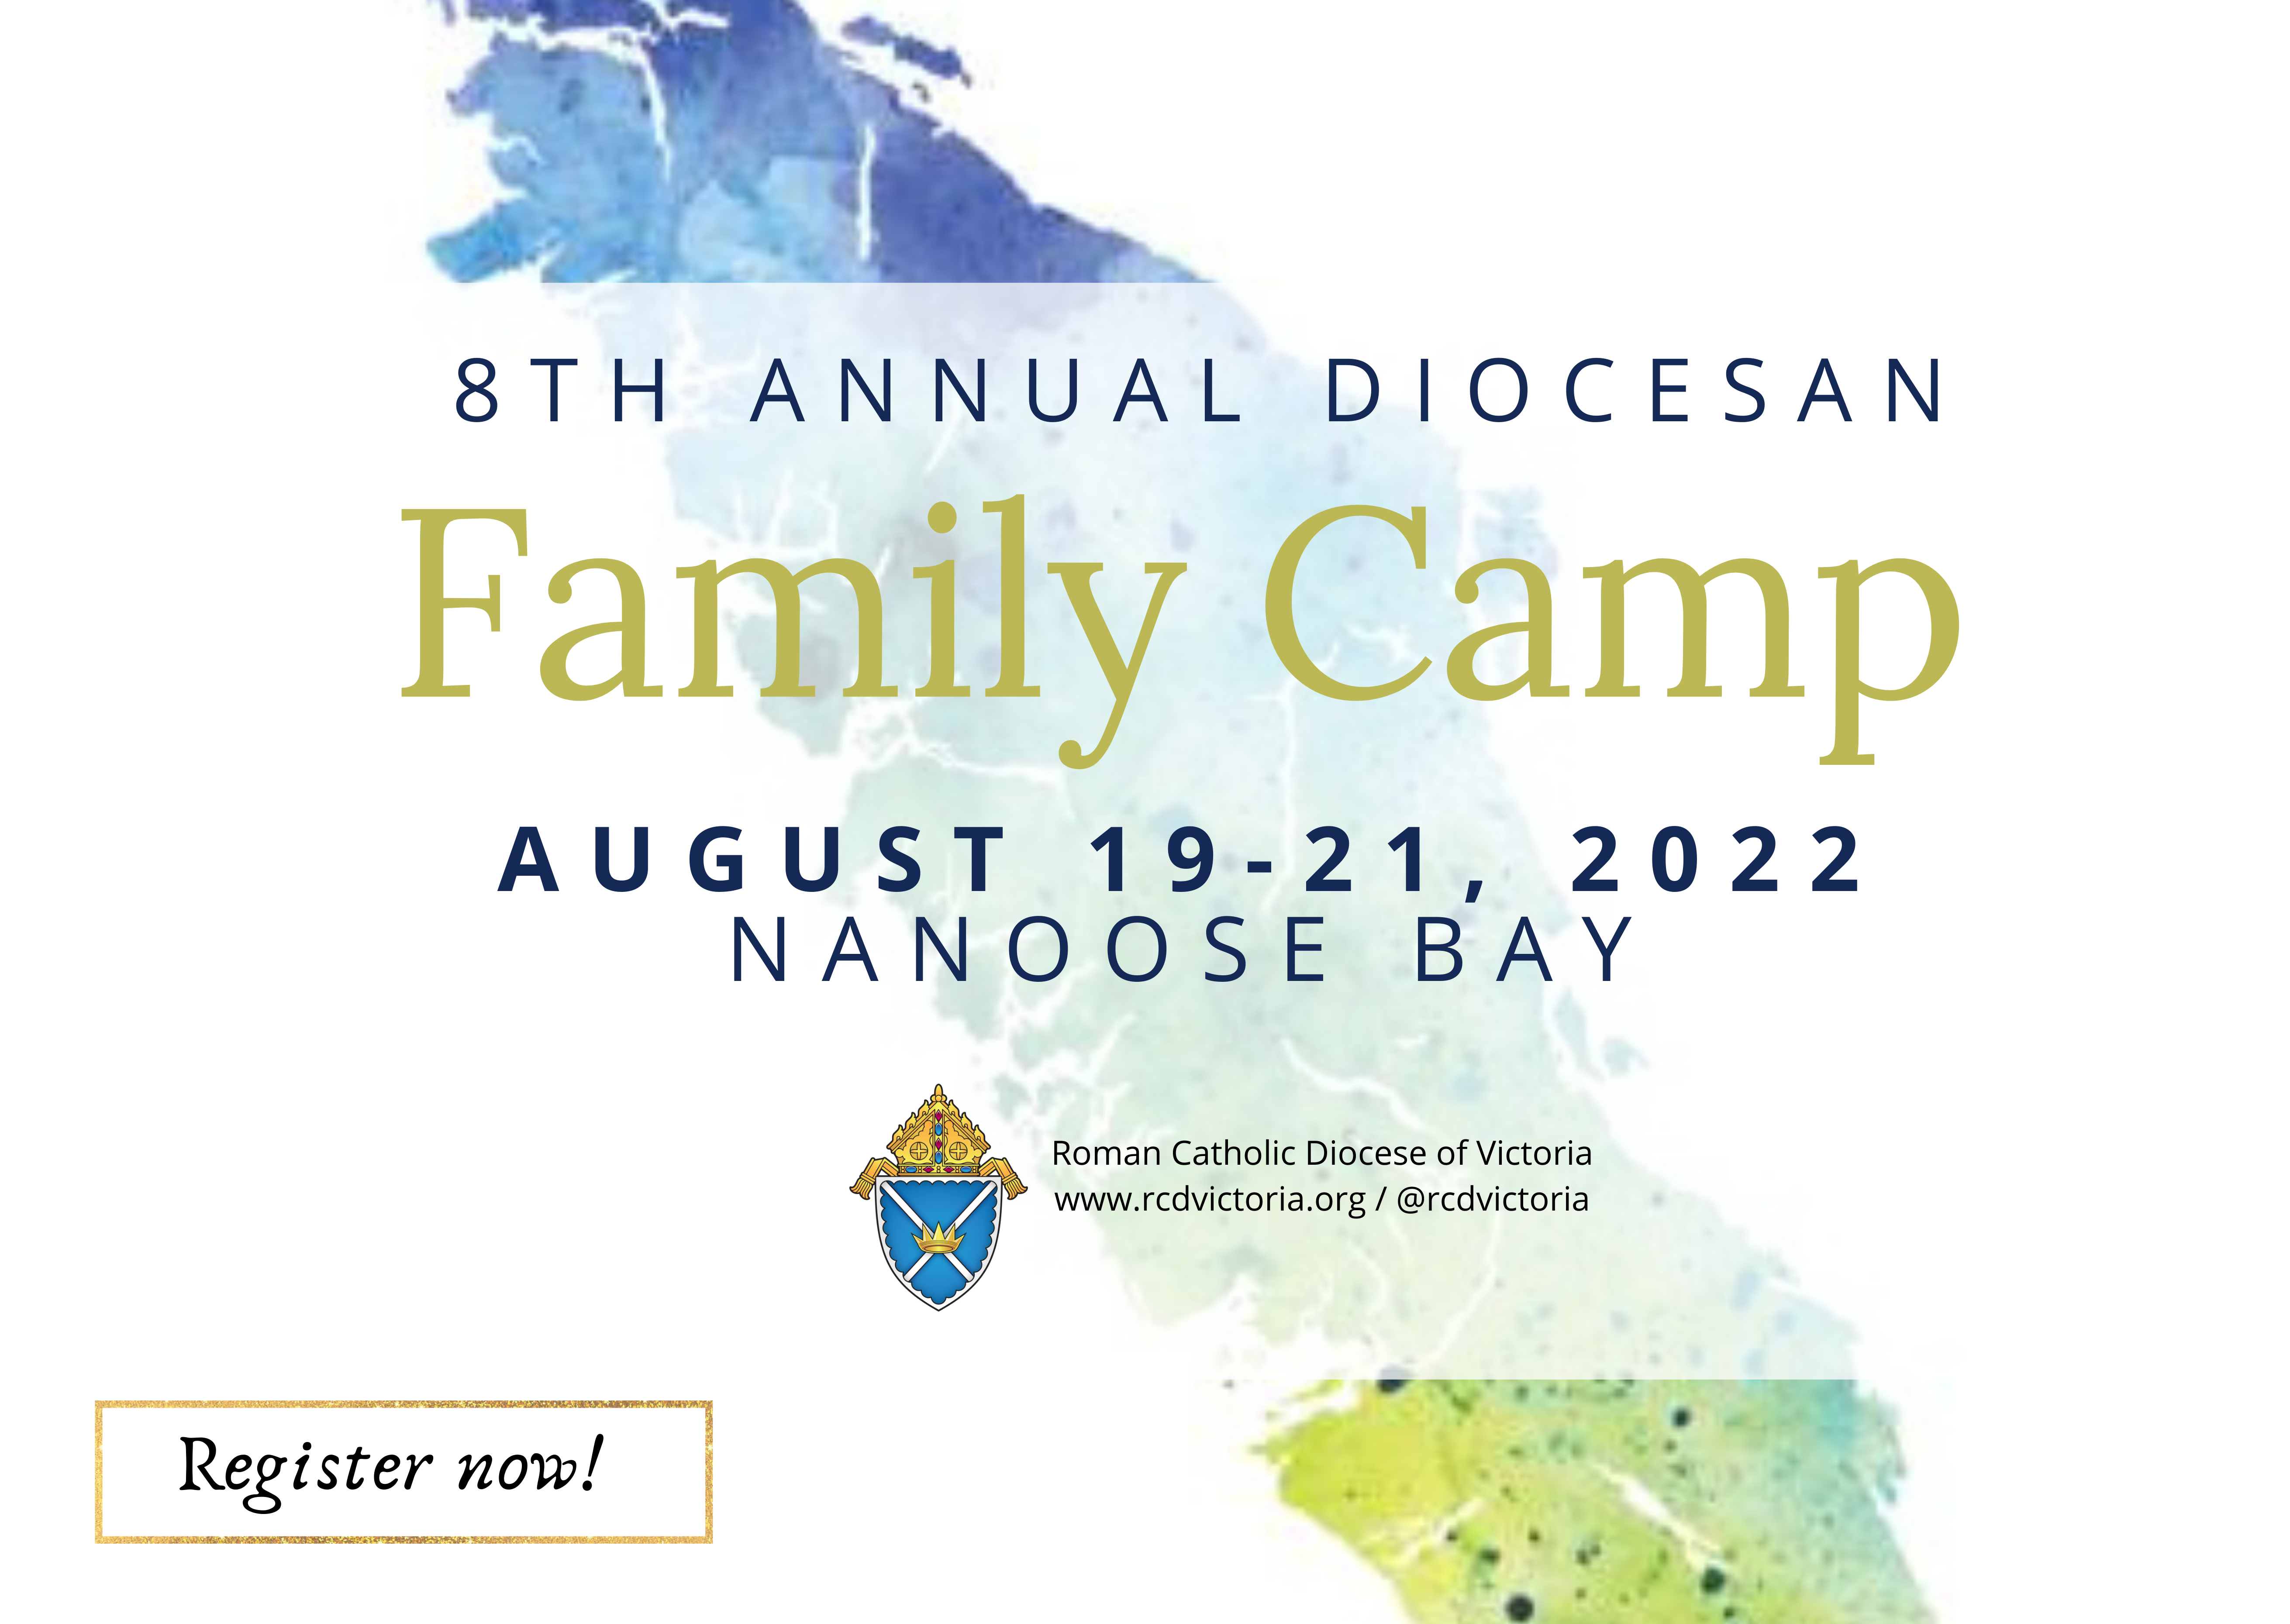 Diocesan Family Camp - Aug 19-21, 2022